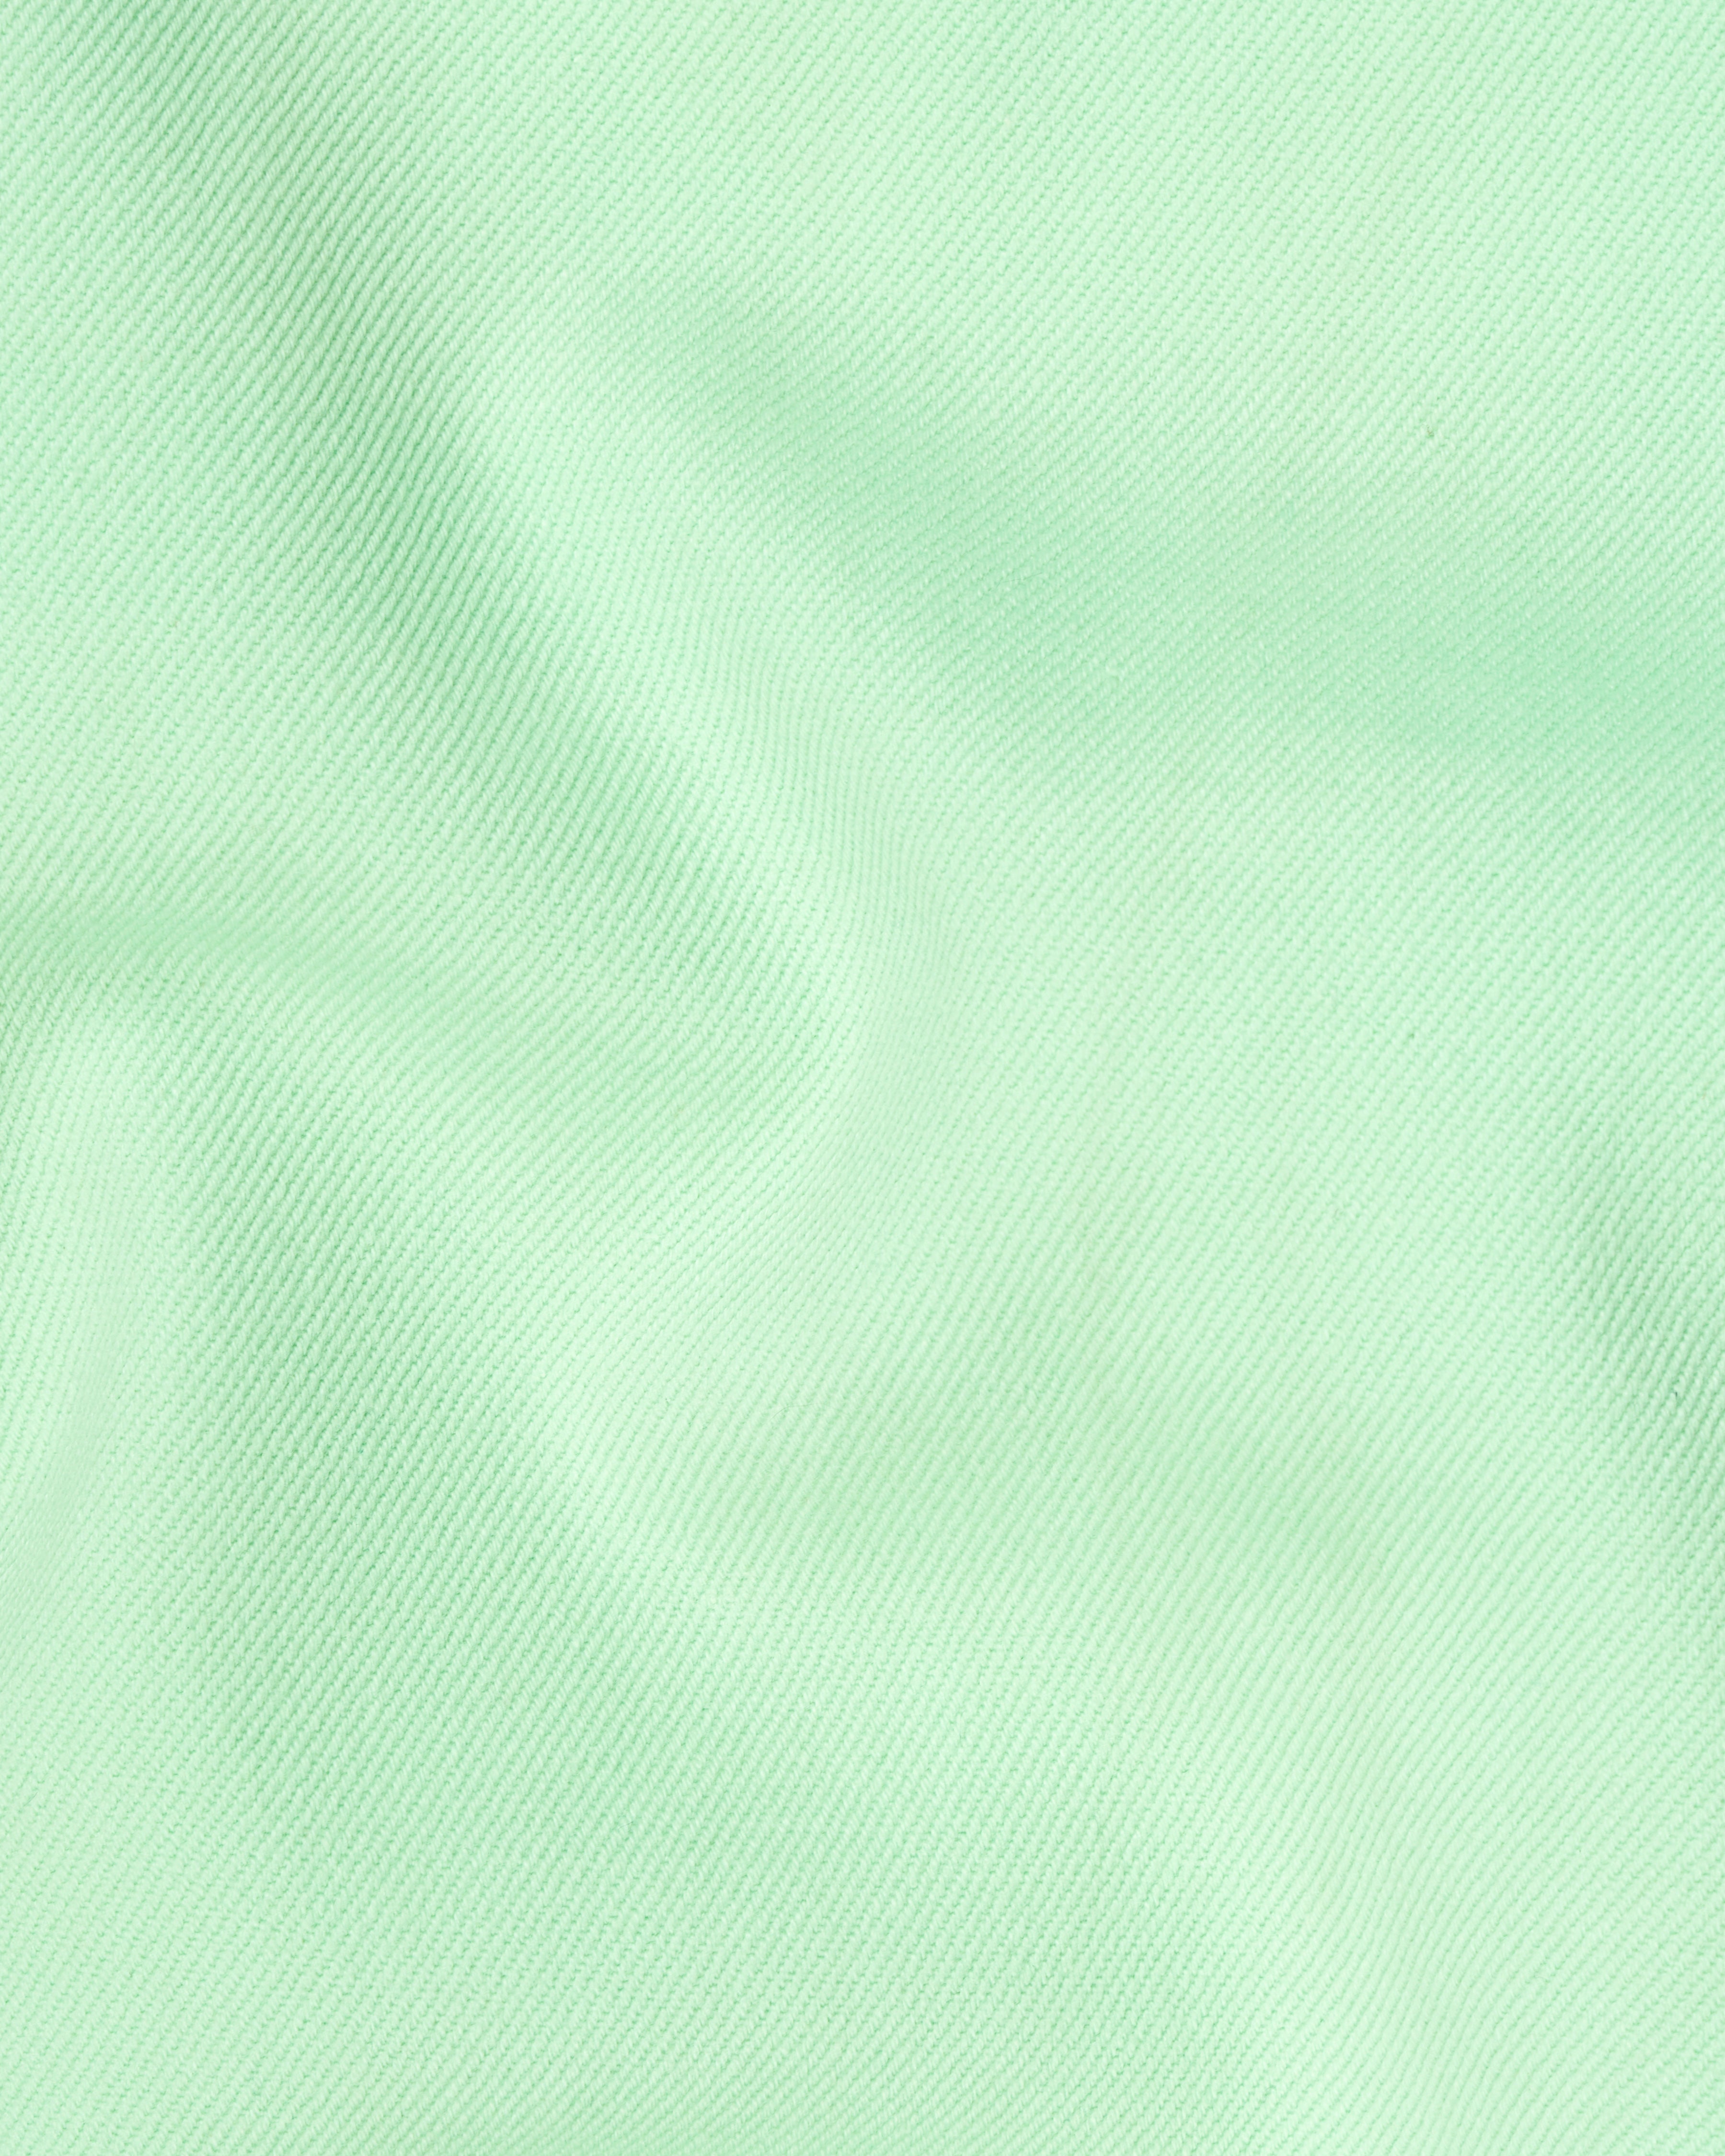 Magic Mint Green Stretchable Denim Shorts SR181-28, SR181-30, SR181-32, SR181-34, SR181-36, SR181-38, SR181-40, SR181-42, SR181-44